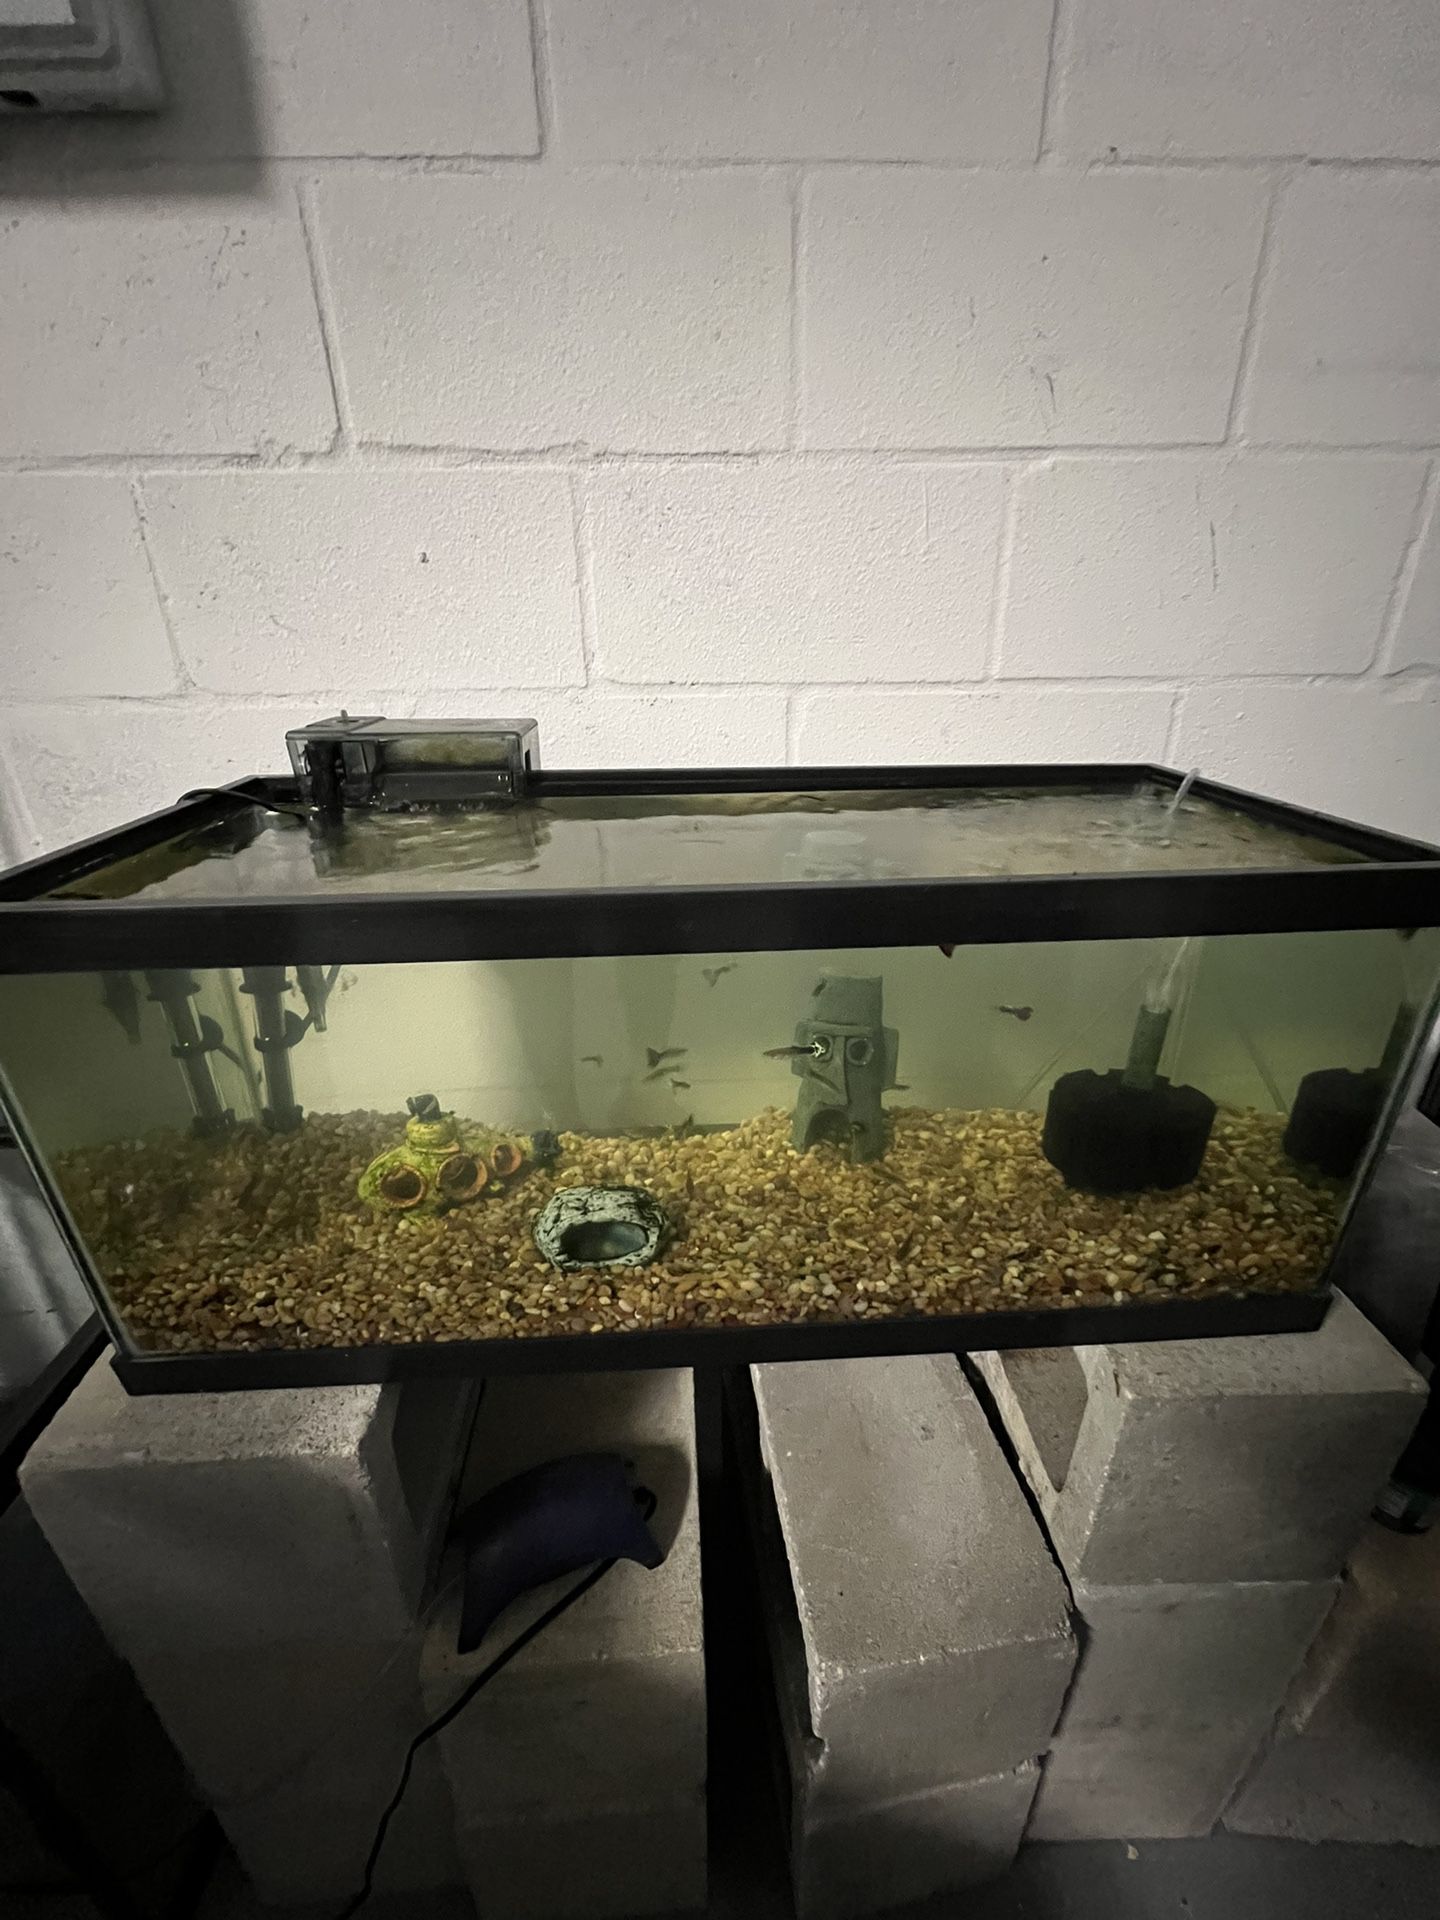 20 Gallon Long Fish Tank